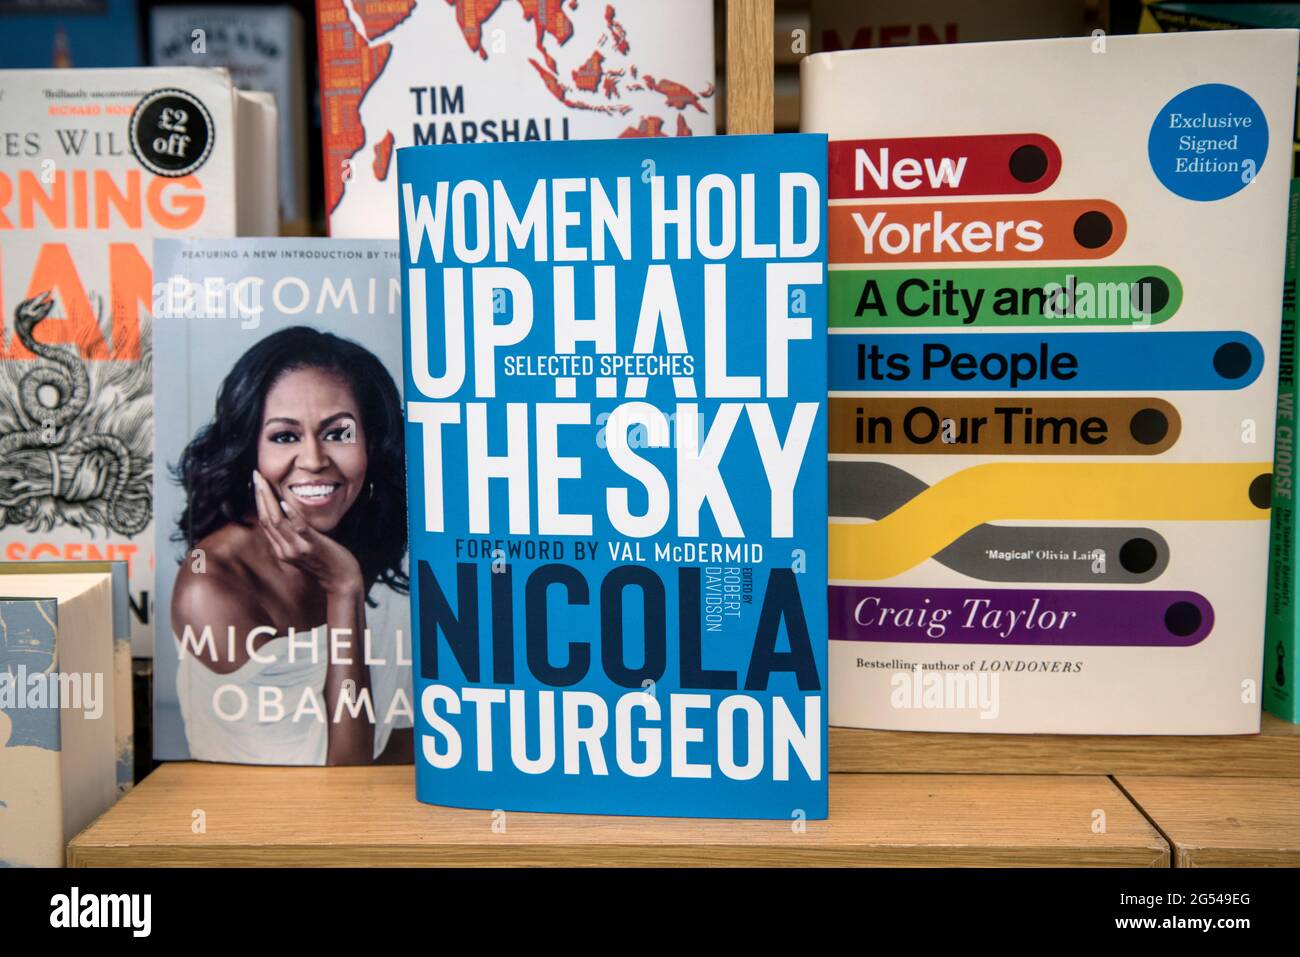 Copy of 'Women Hold Up The Sky' the selected speeches of Nicola Sturgeon in the window of a bookshop on Princes Street, Edinburgh, Scotland, UK. Stock Photo